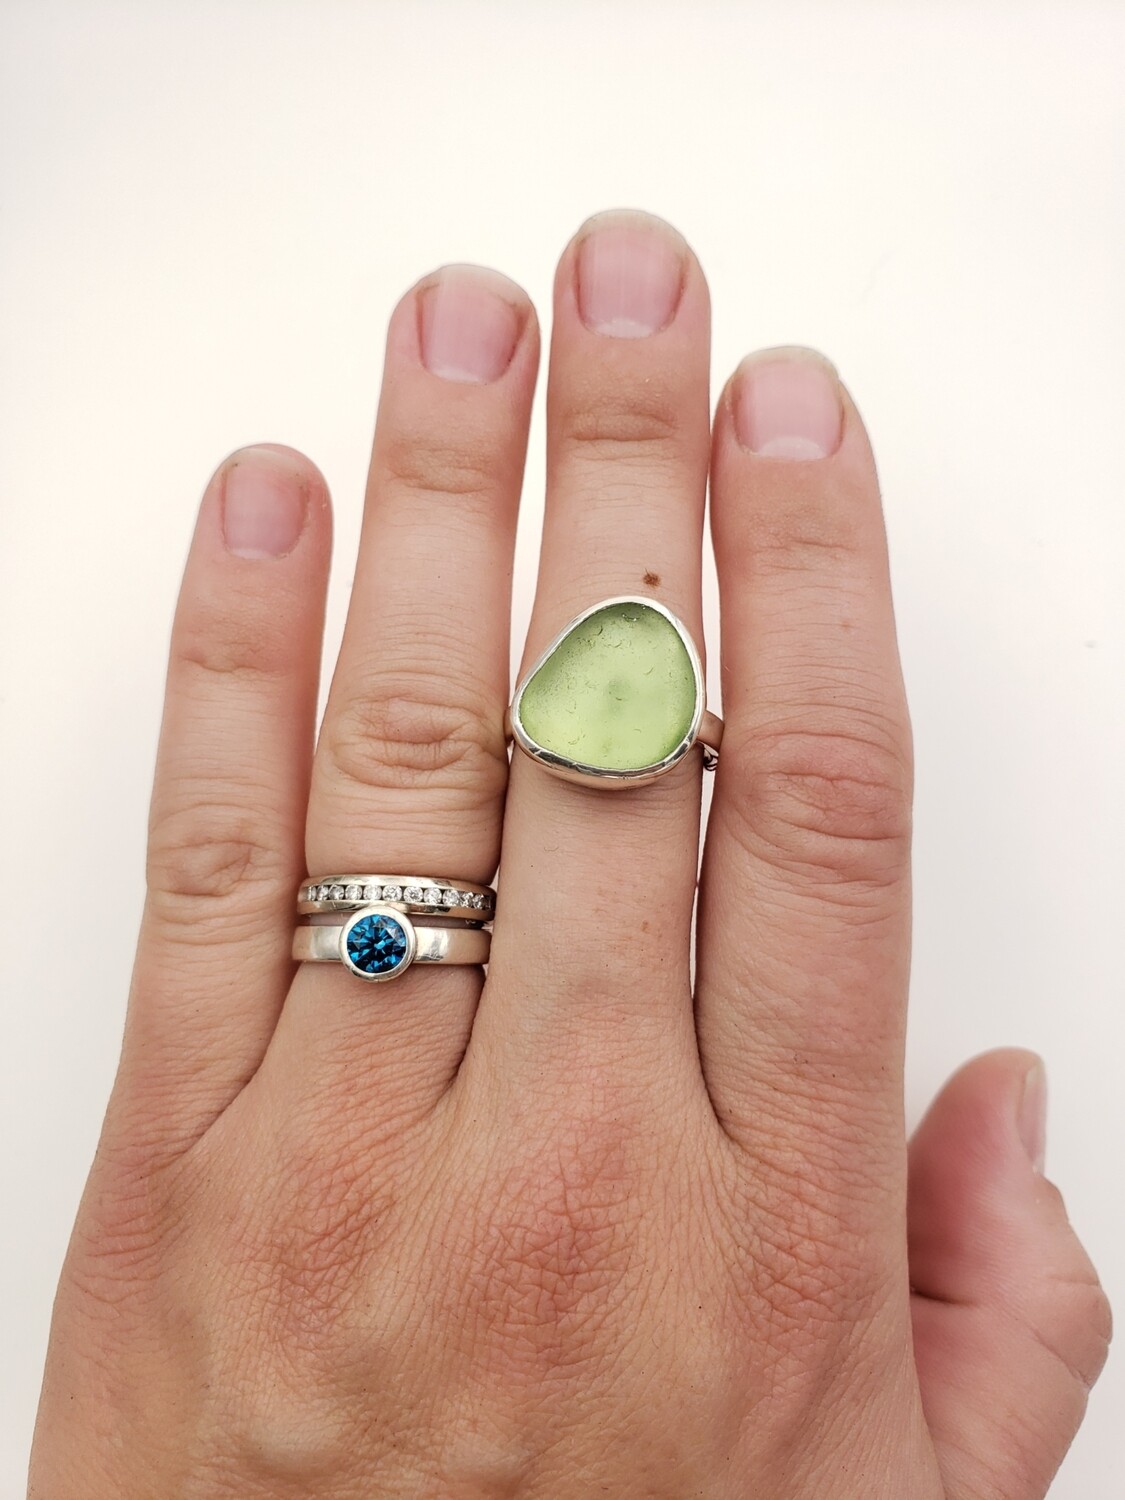 UV Reactive Lake Erie Beach Glass Ring - size 9